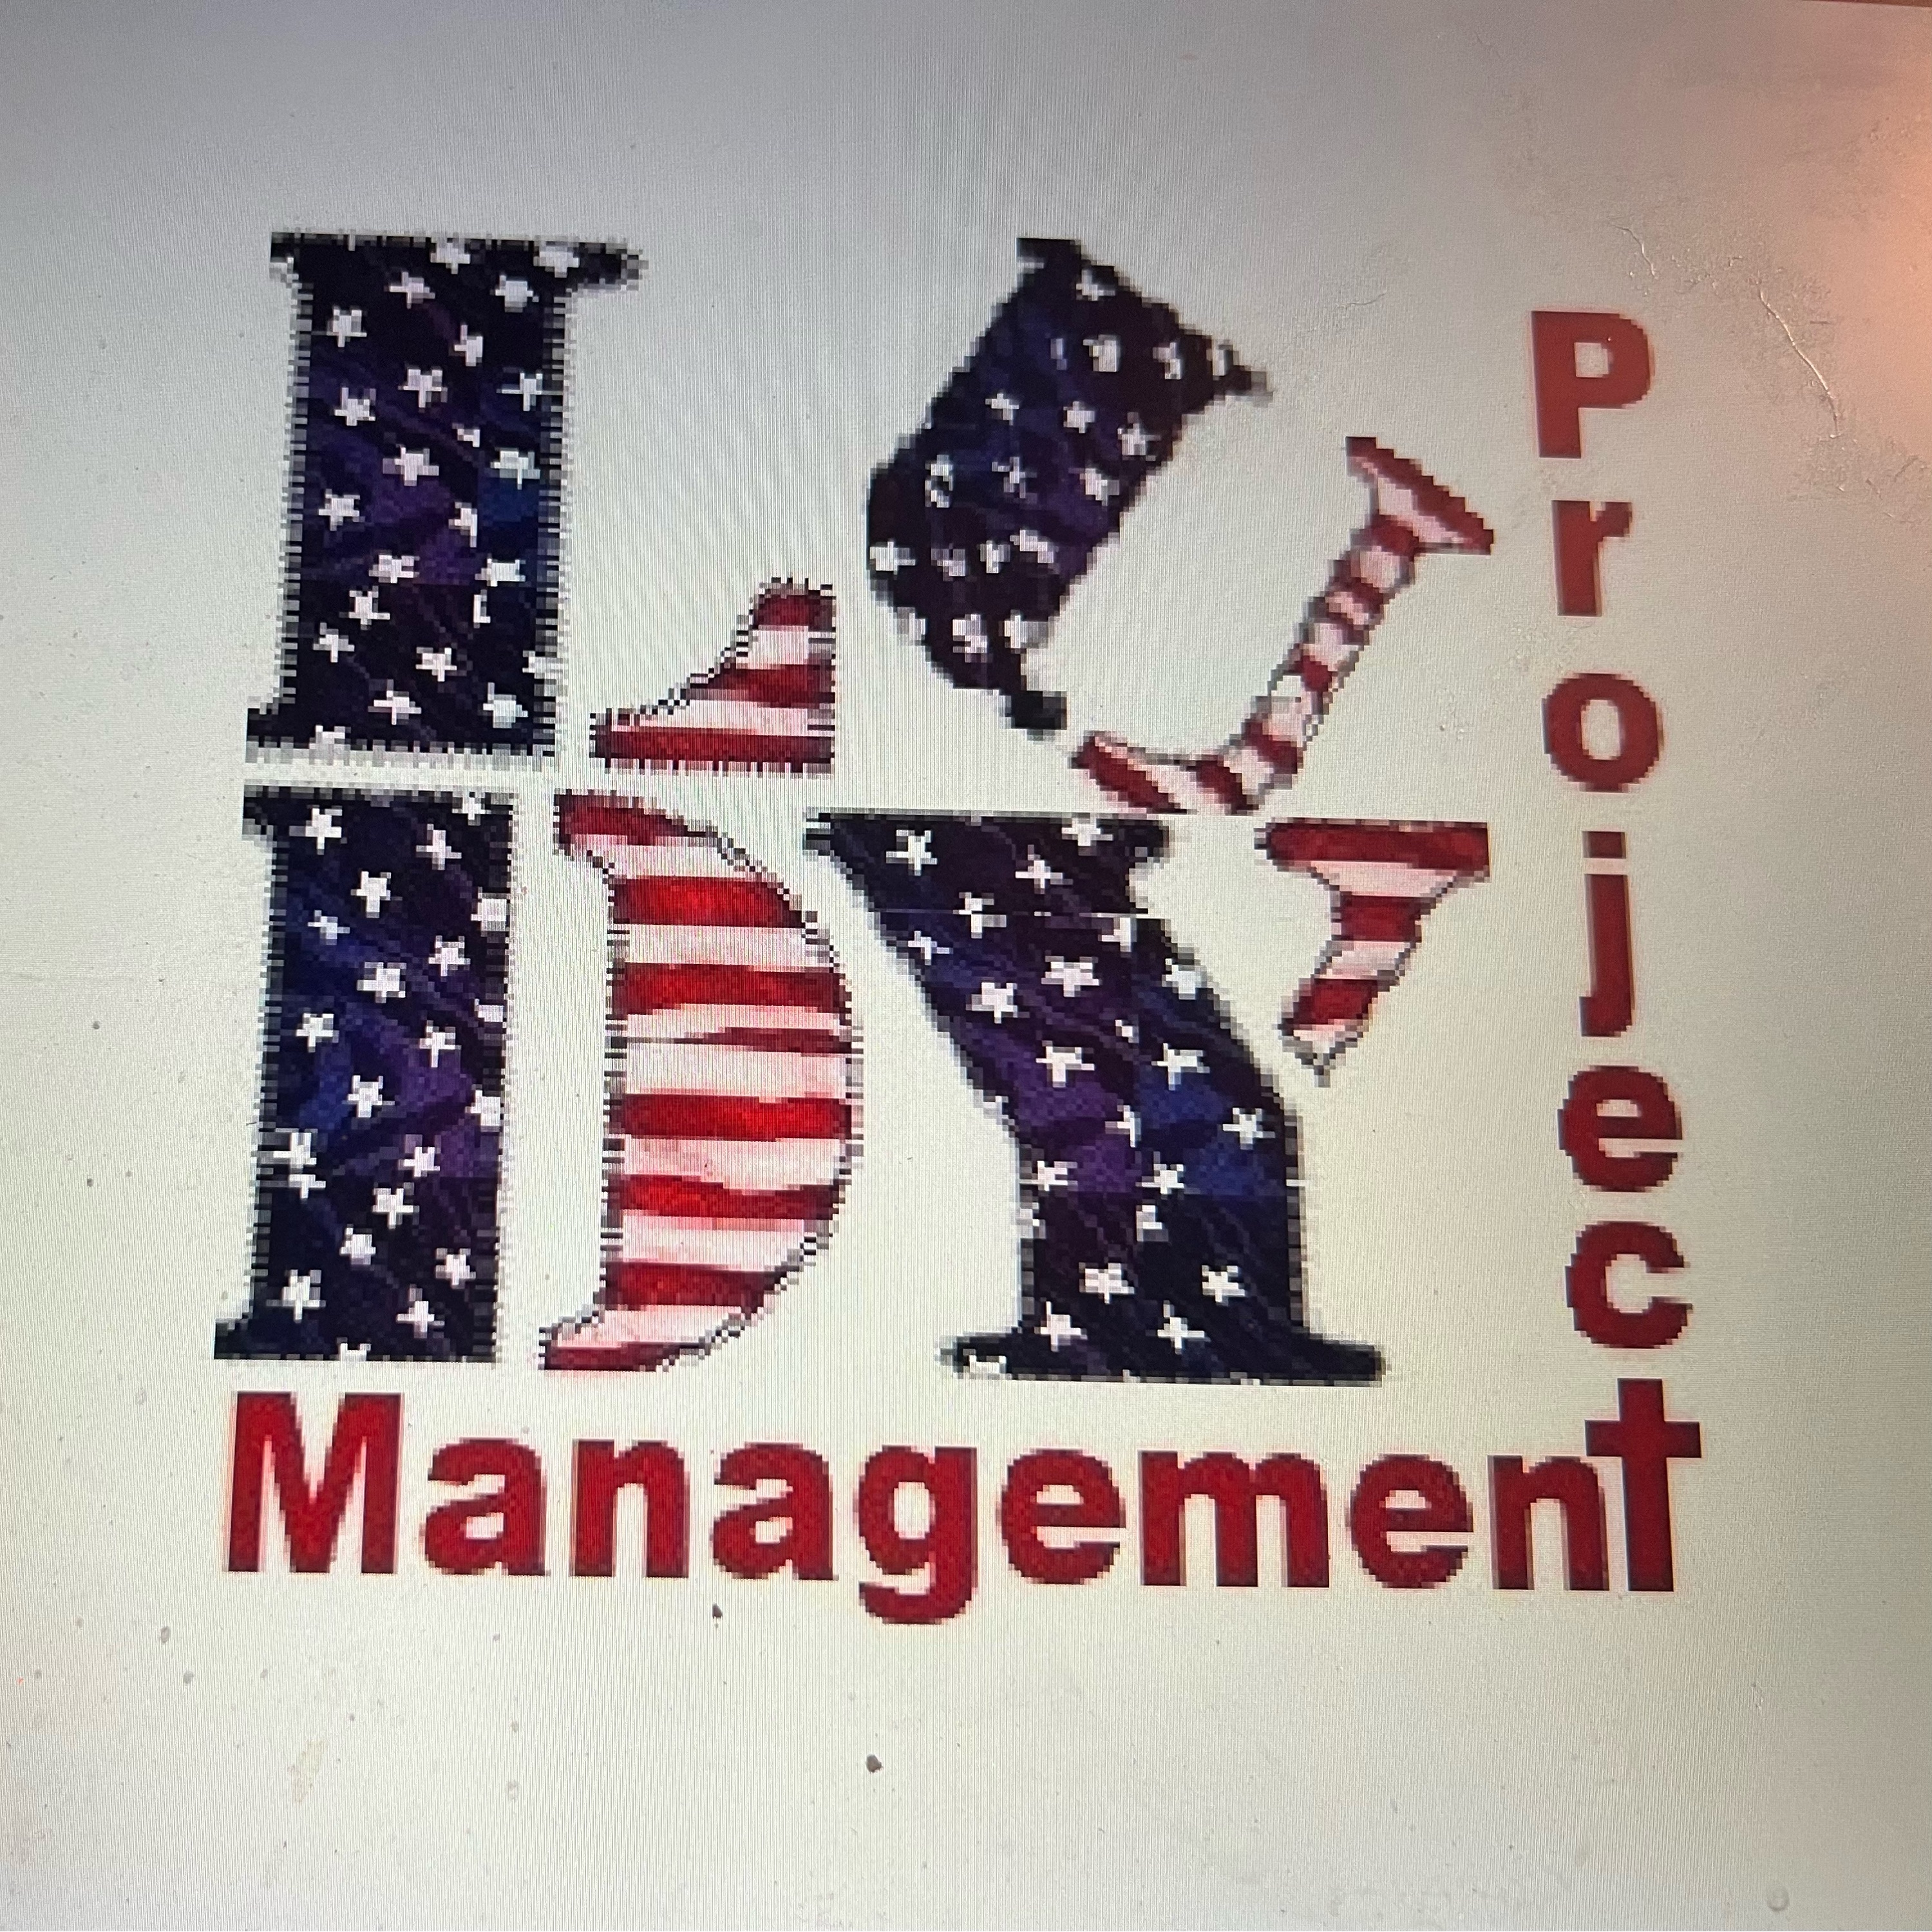 Ludy Project Management LLC Logo